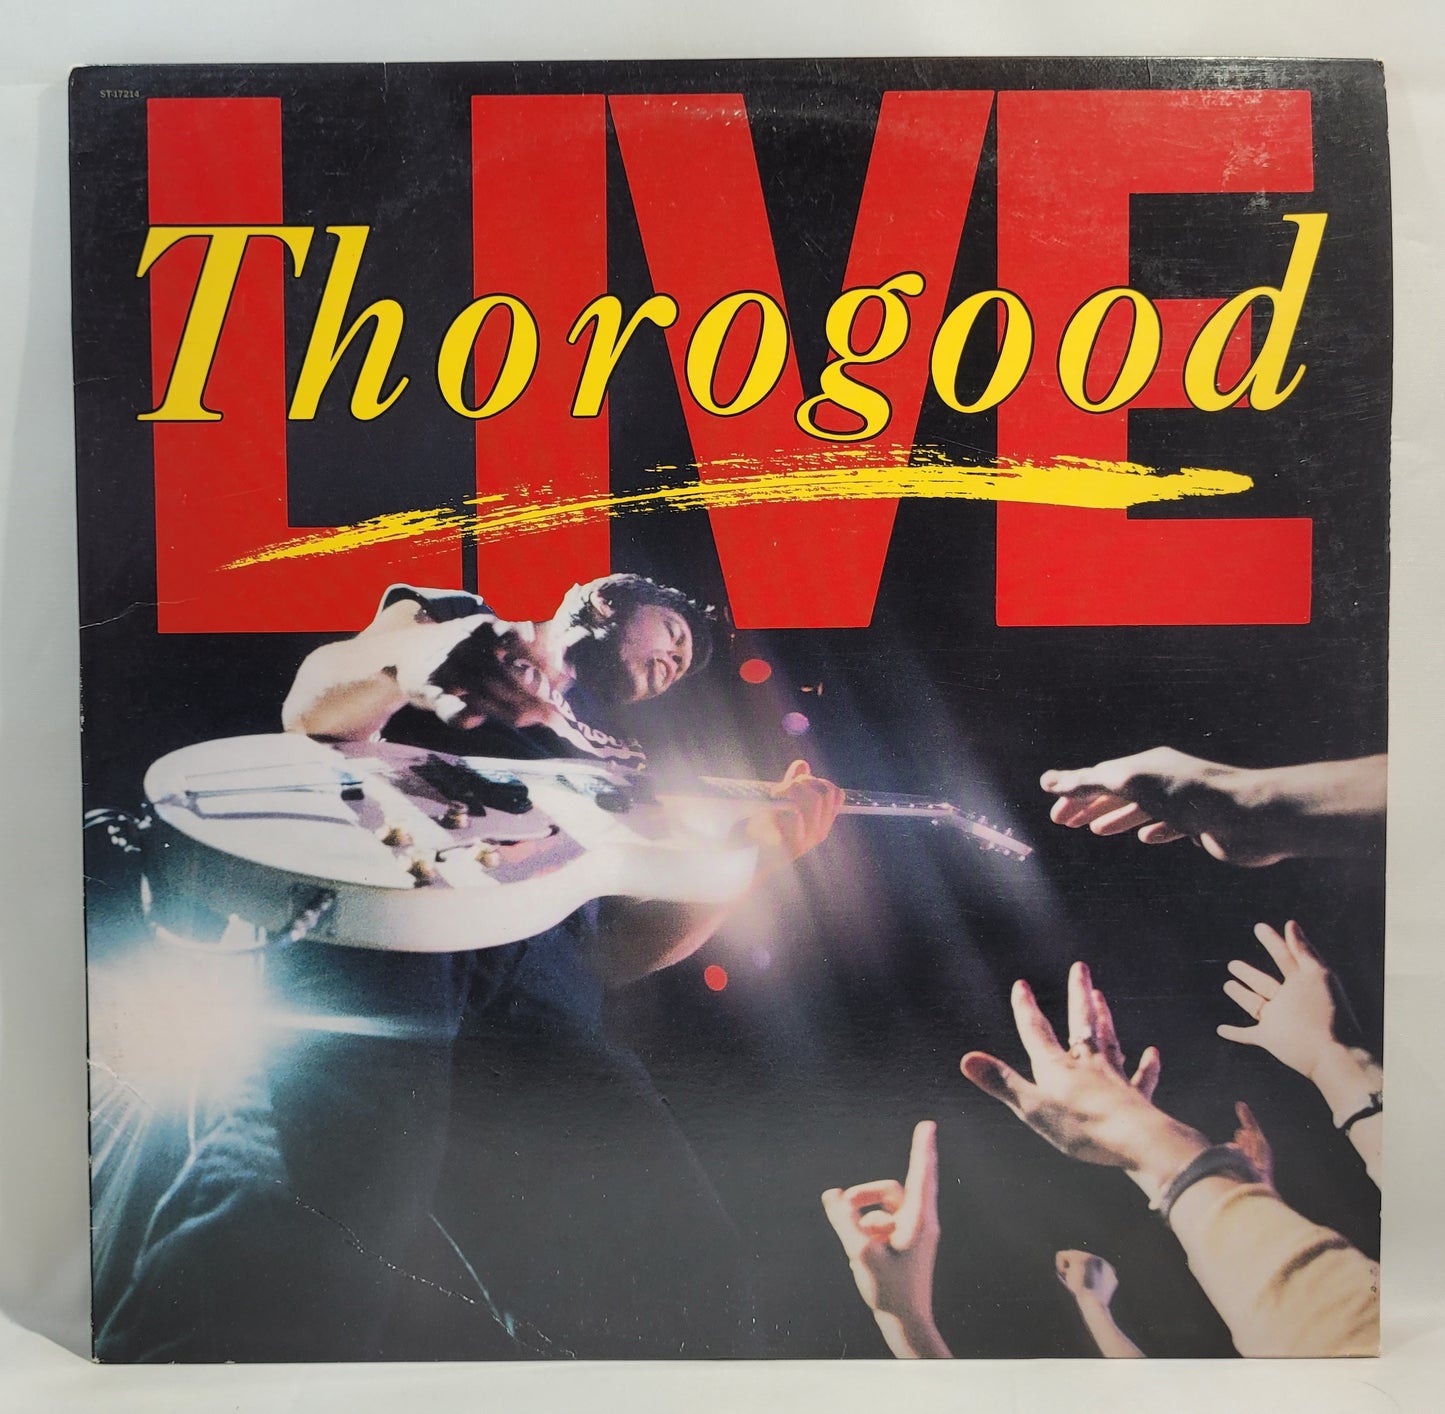 George Thorogood & The Destroyers - Live [Vinyl Record LP]